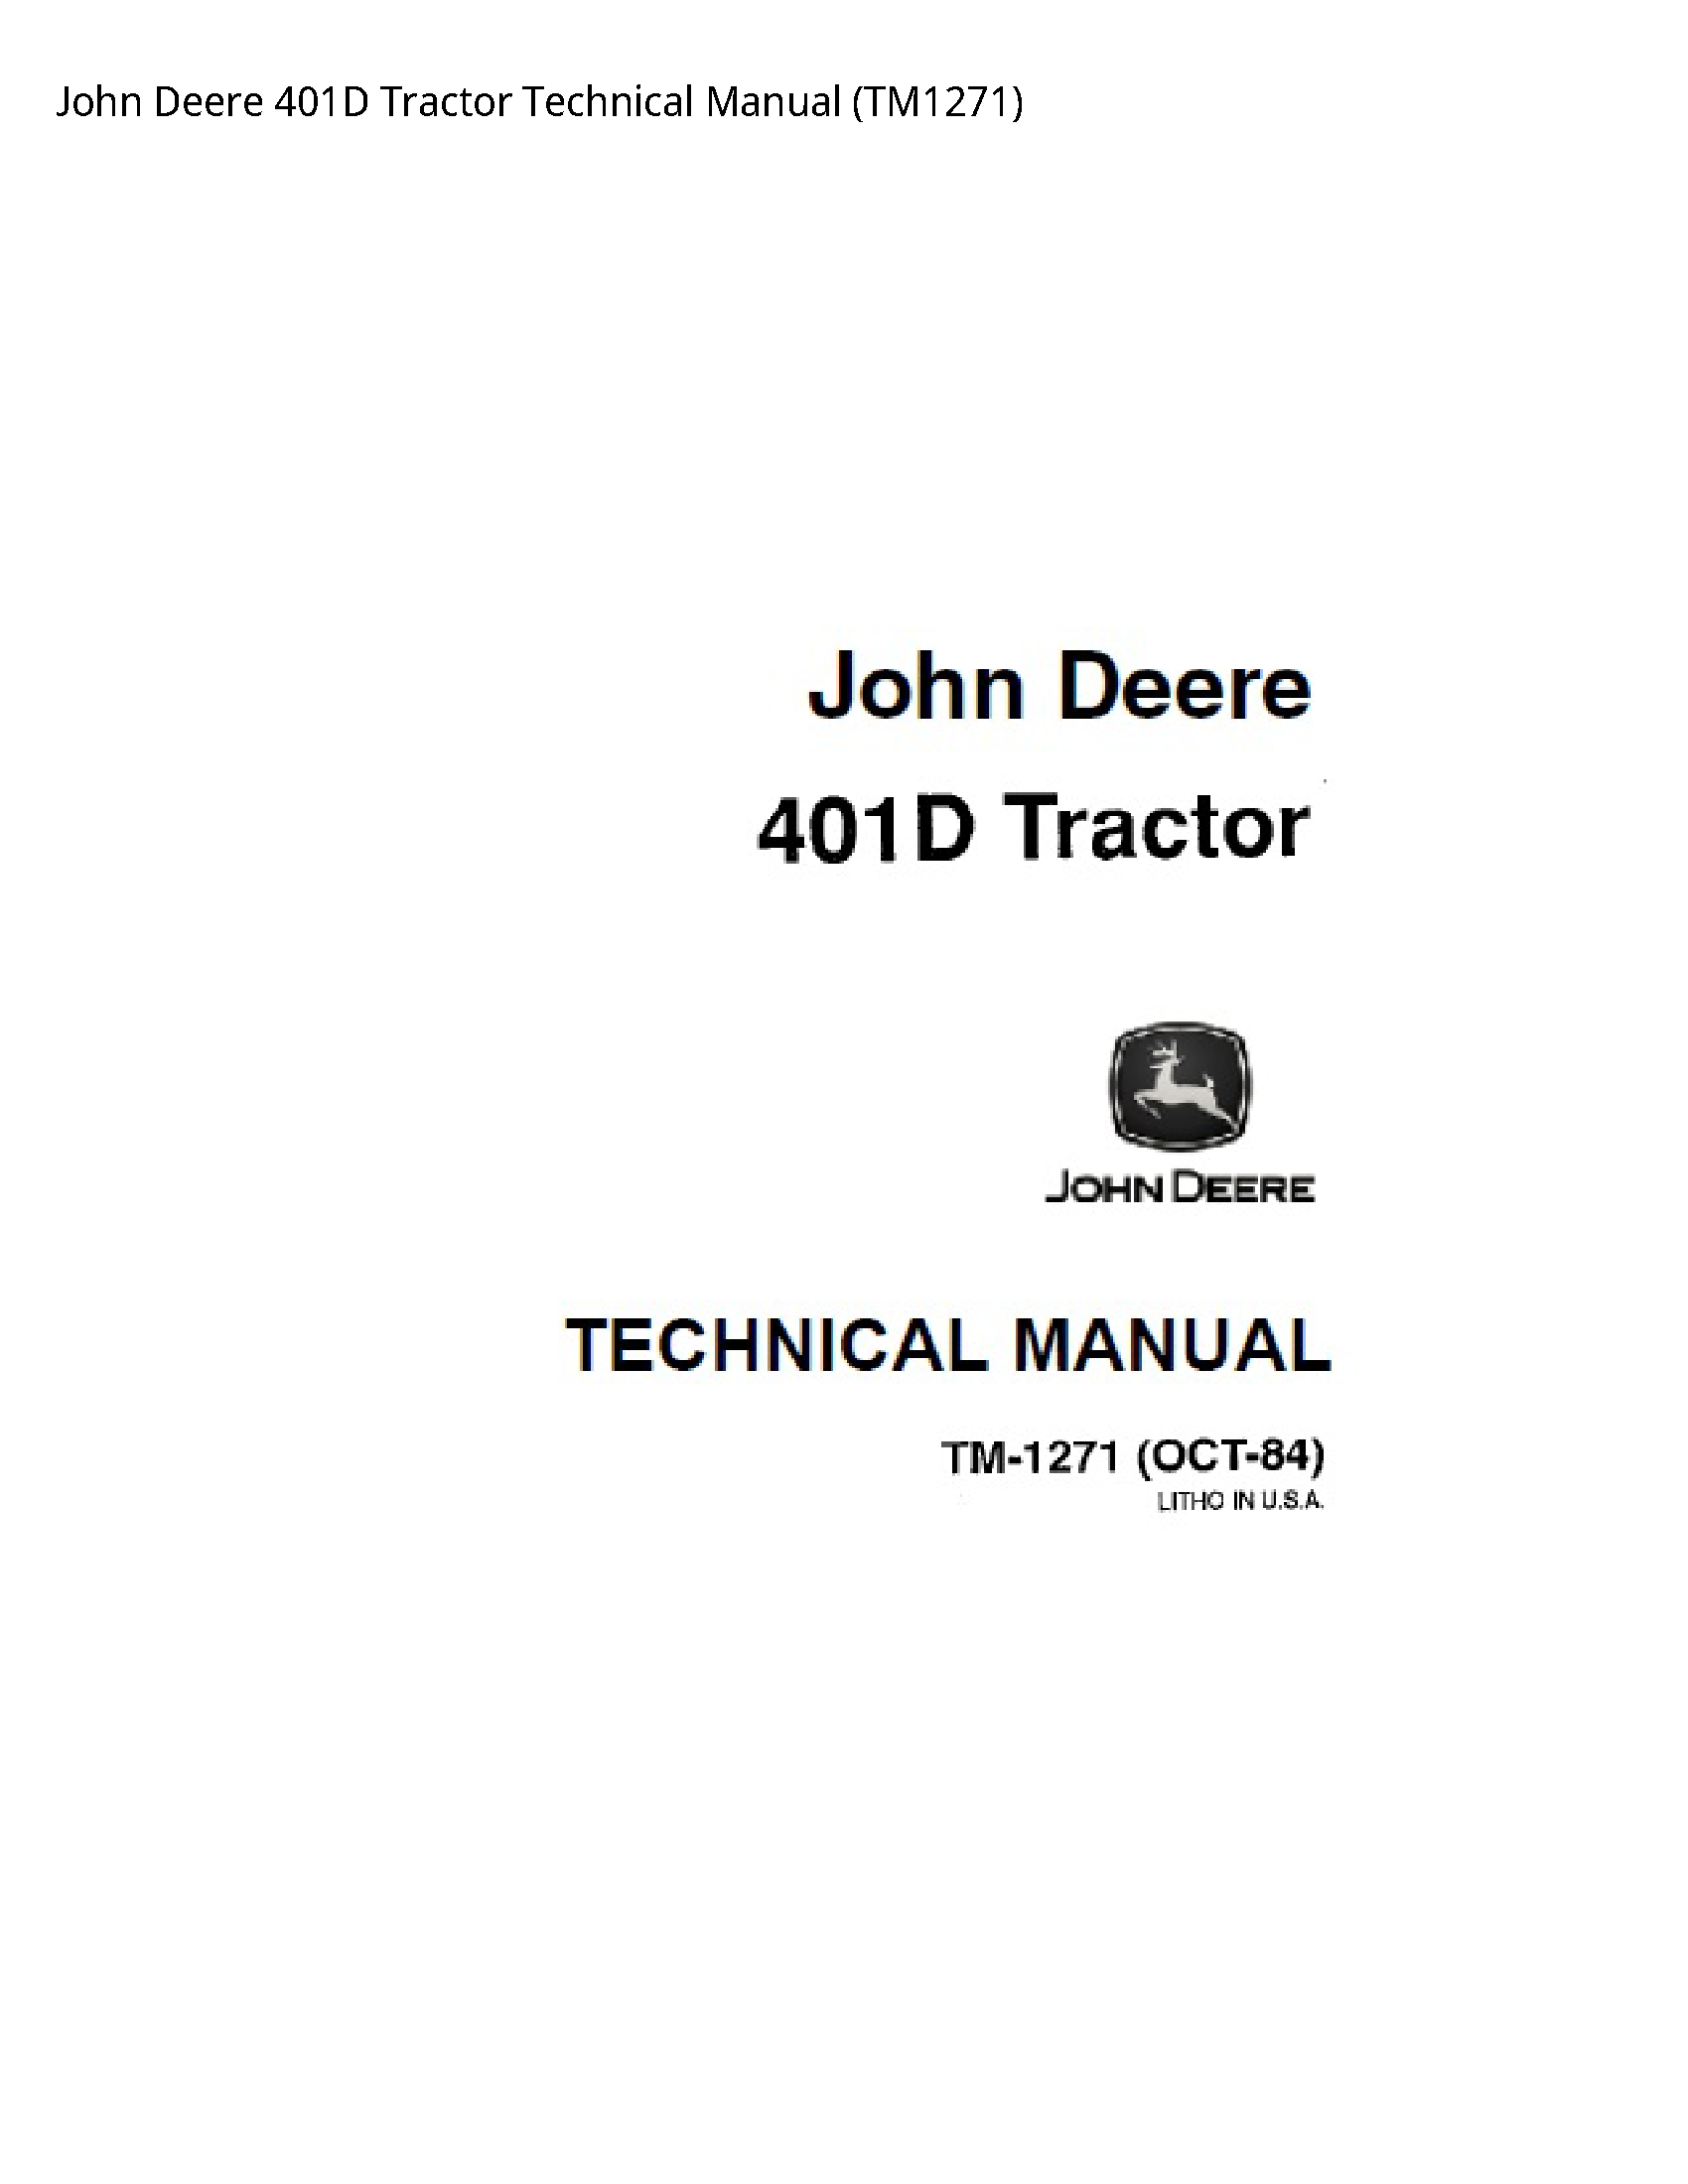 John Deere 401D Tractor Technical manual